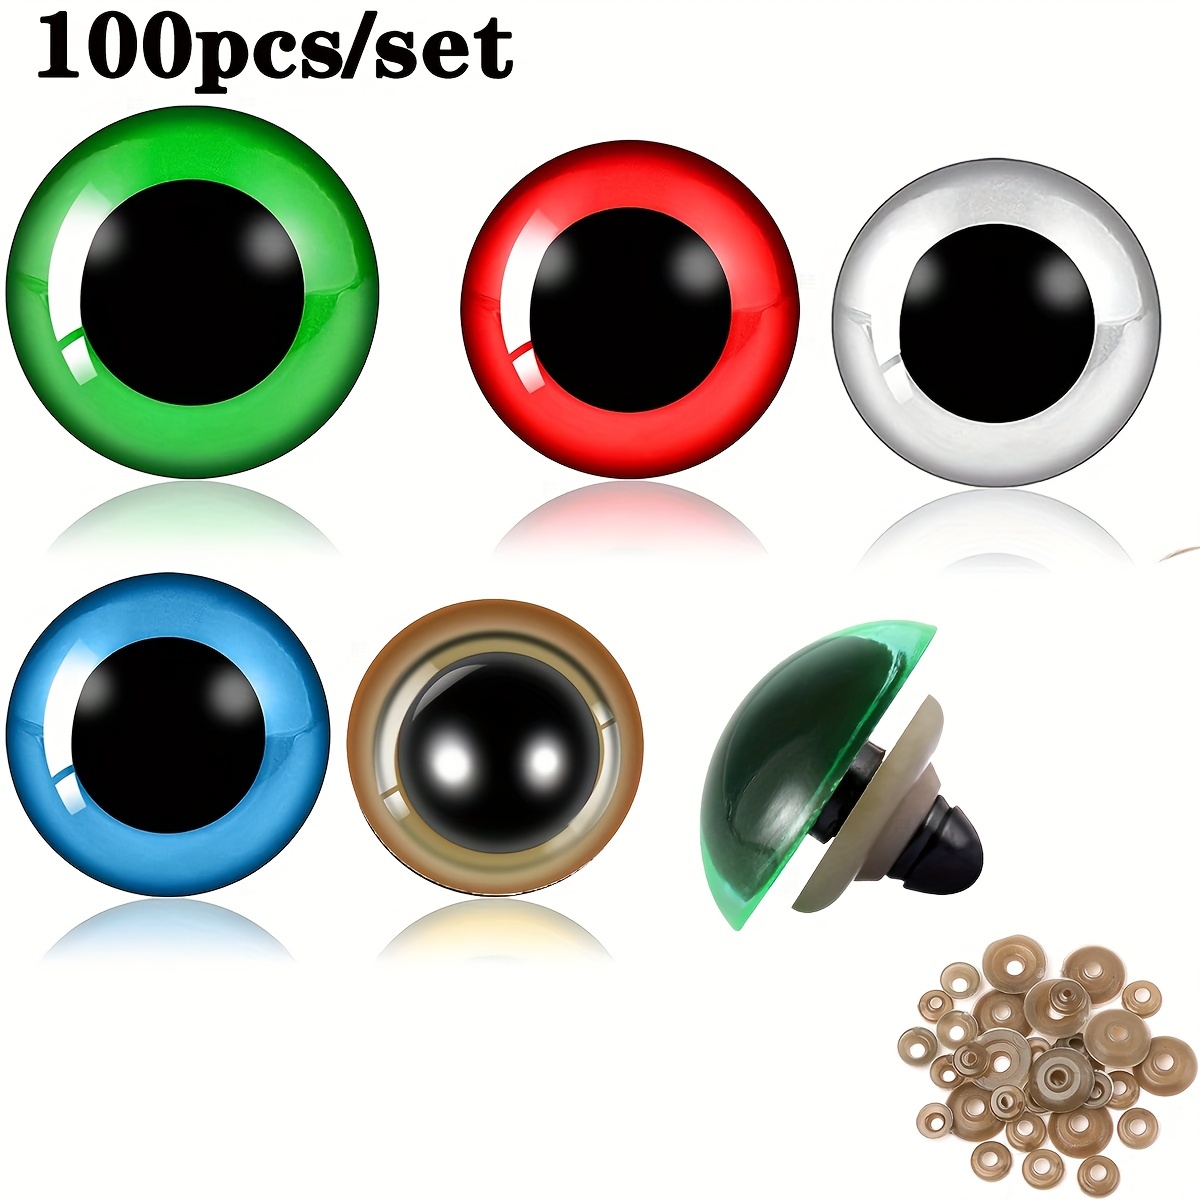 100Pcs/set Supplies Imitation Doll Glass Eyes DIY Crafts Safety